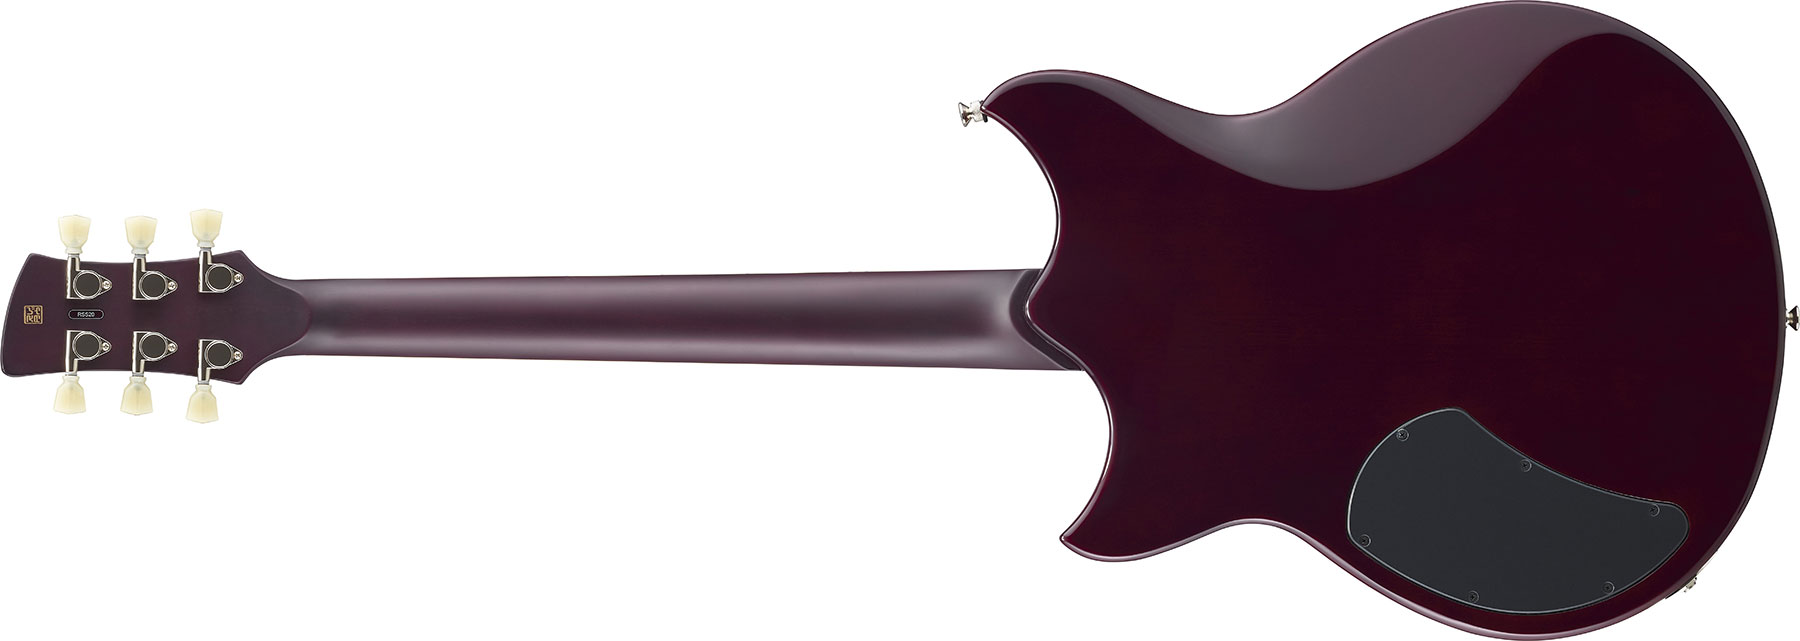 Yamaha Rss20 Revstar Standard Hh Ht Rw - Black - Double Cut E-Gitarre - Variation 2